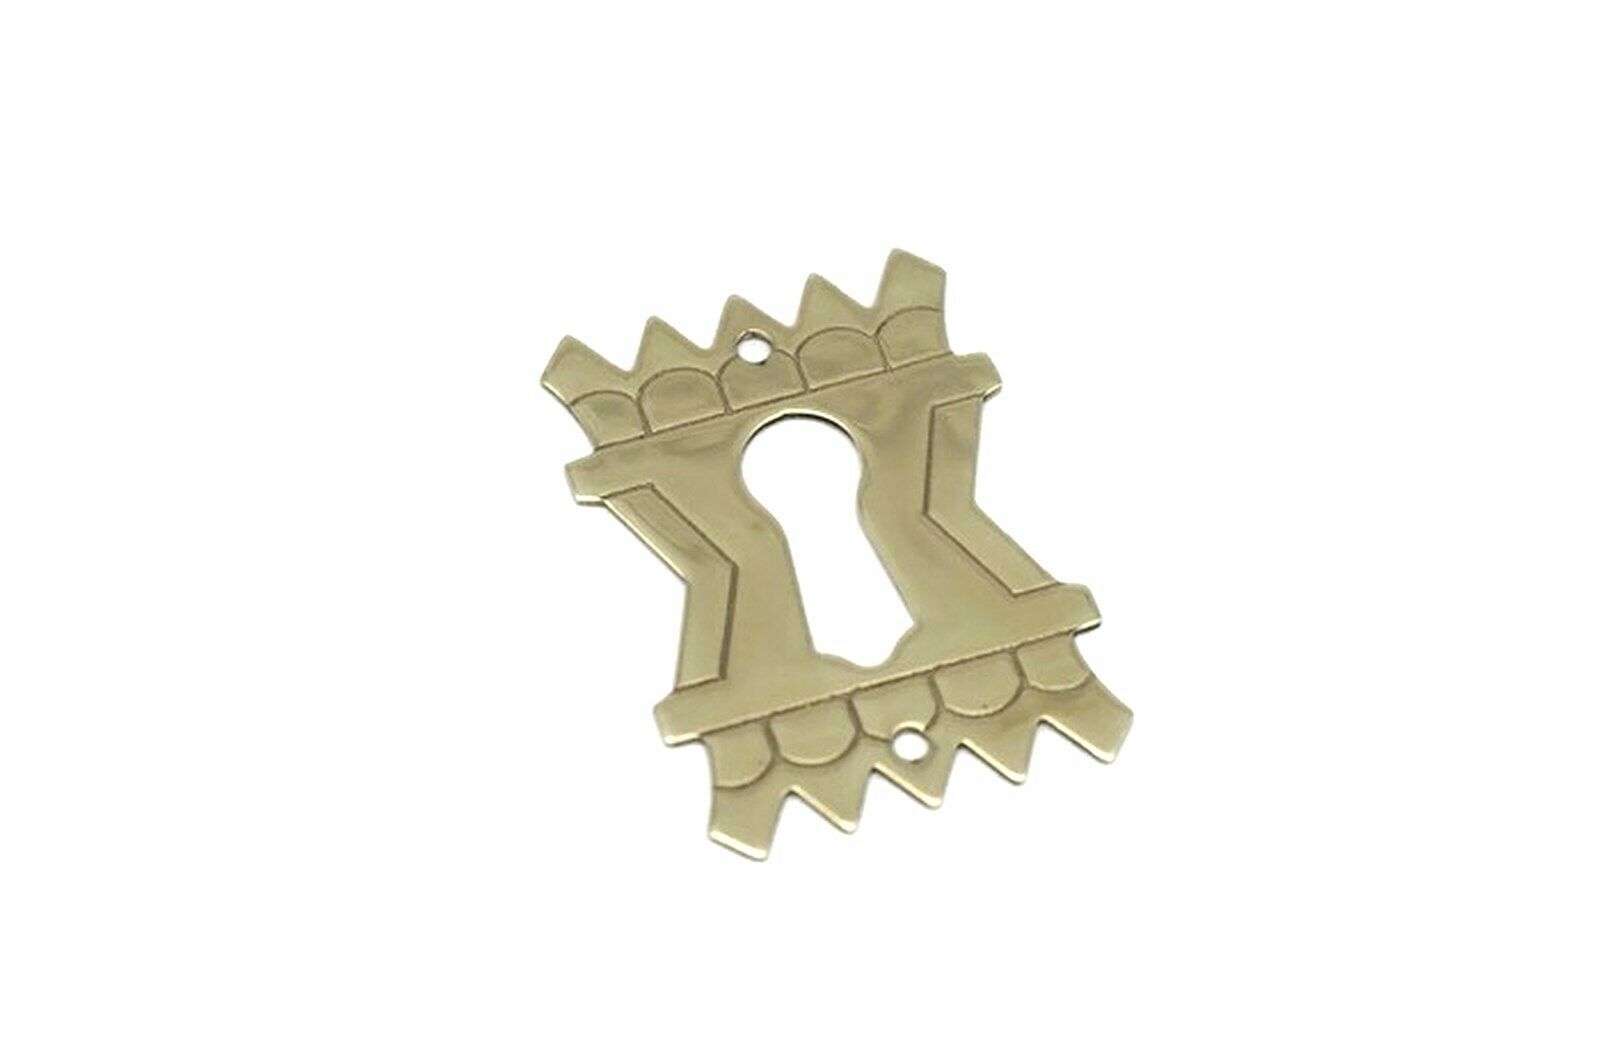 1"  Keyhole Cover Plate Escutcheon Eastlake Furniture Brass Key Hole Lock Plate